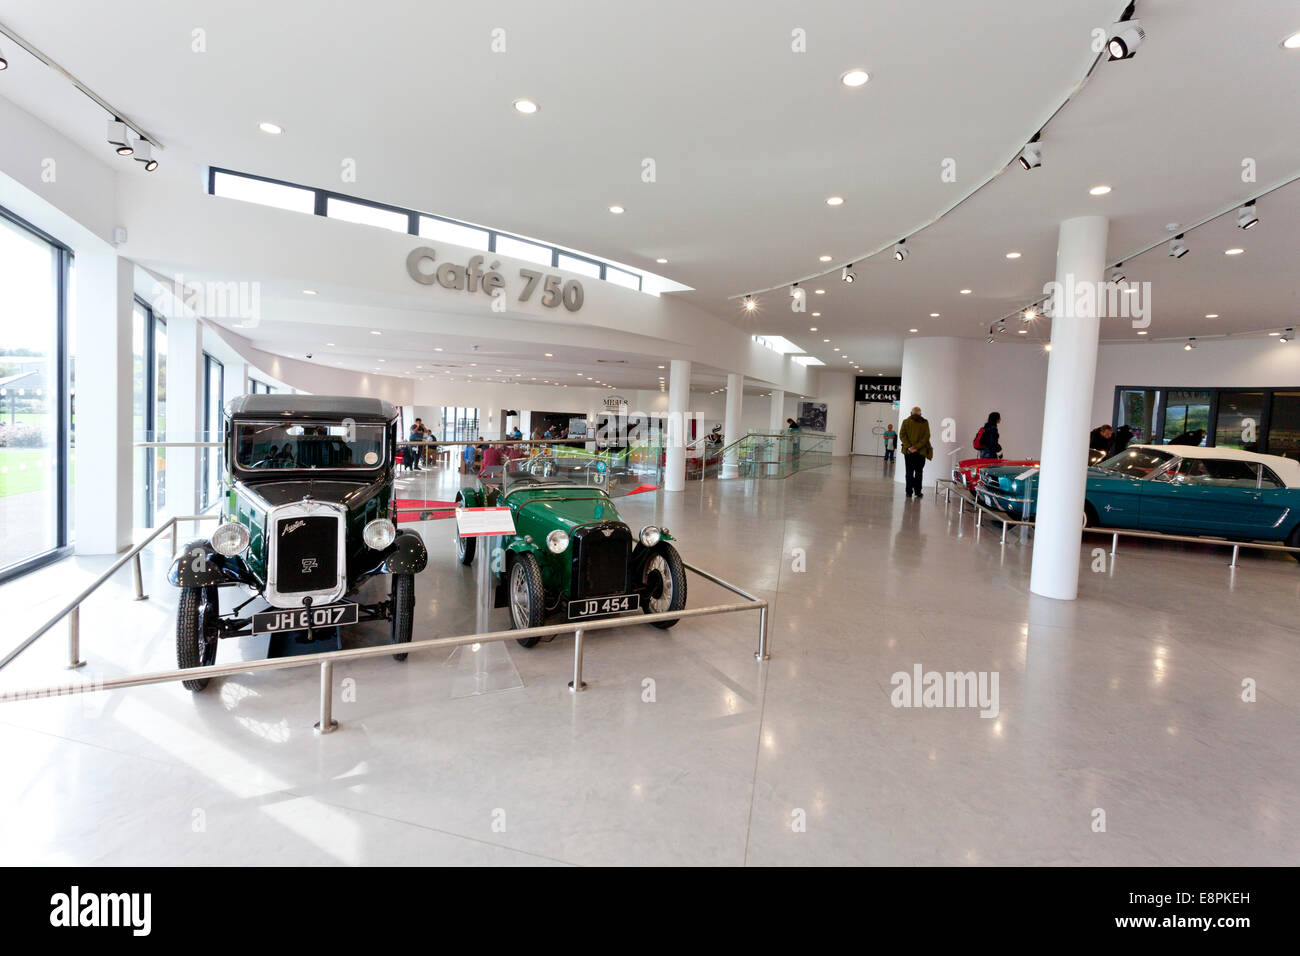 La nuova (2014) entrata foyer e Cafe 750 in Haynes International Motor Museum Sparkford Somerset REGNO UNITO Foto Stock